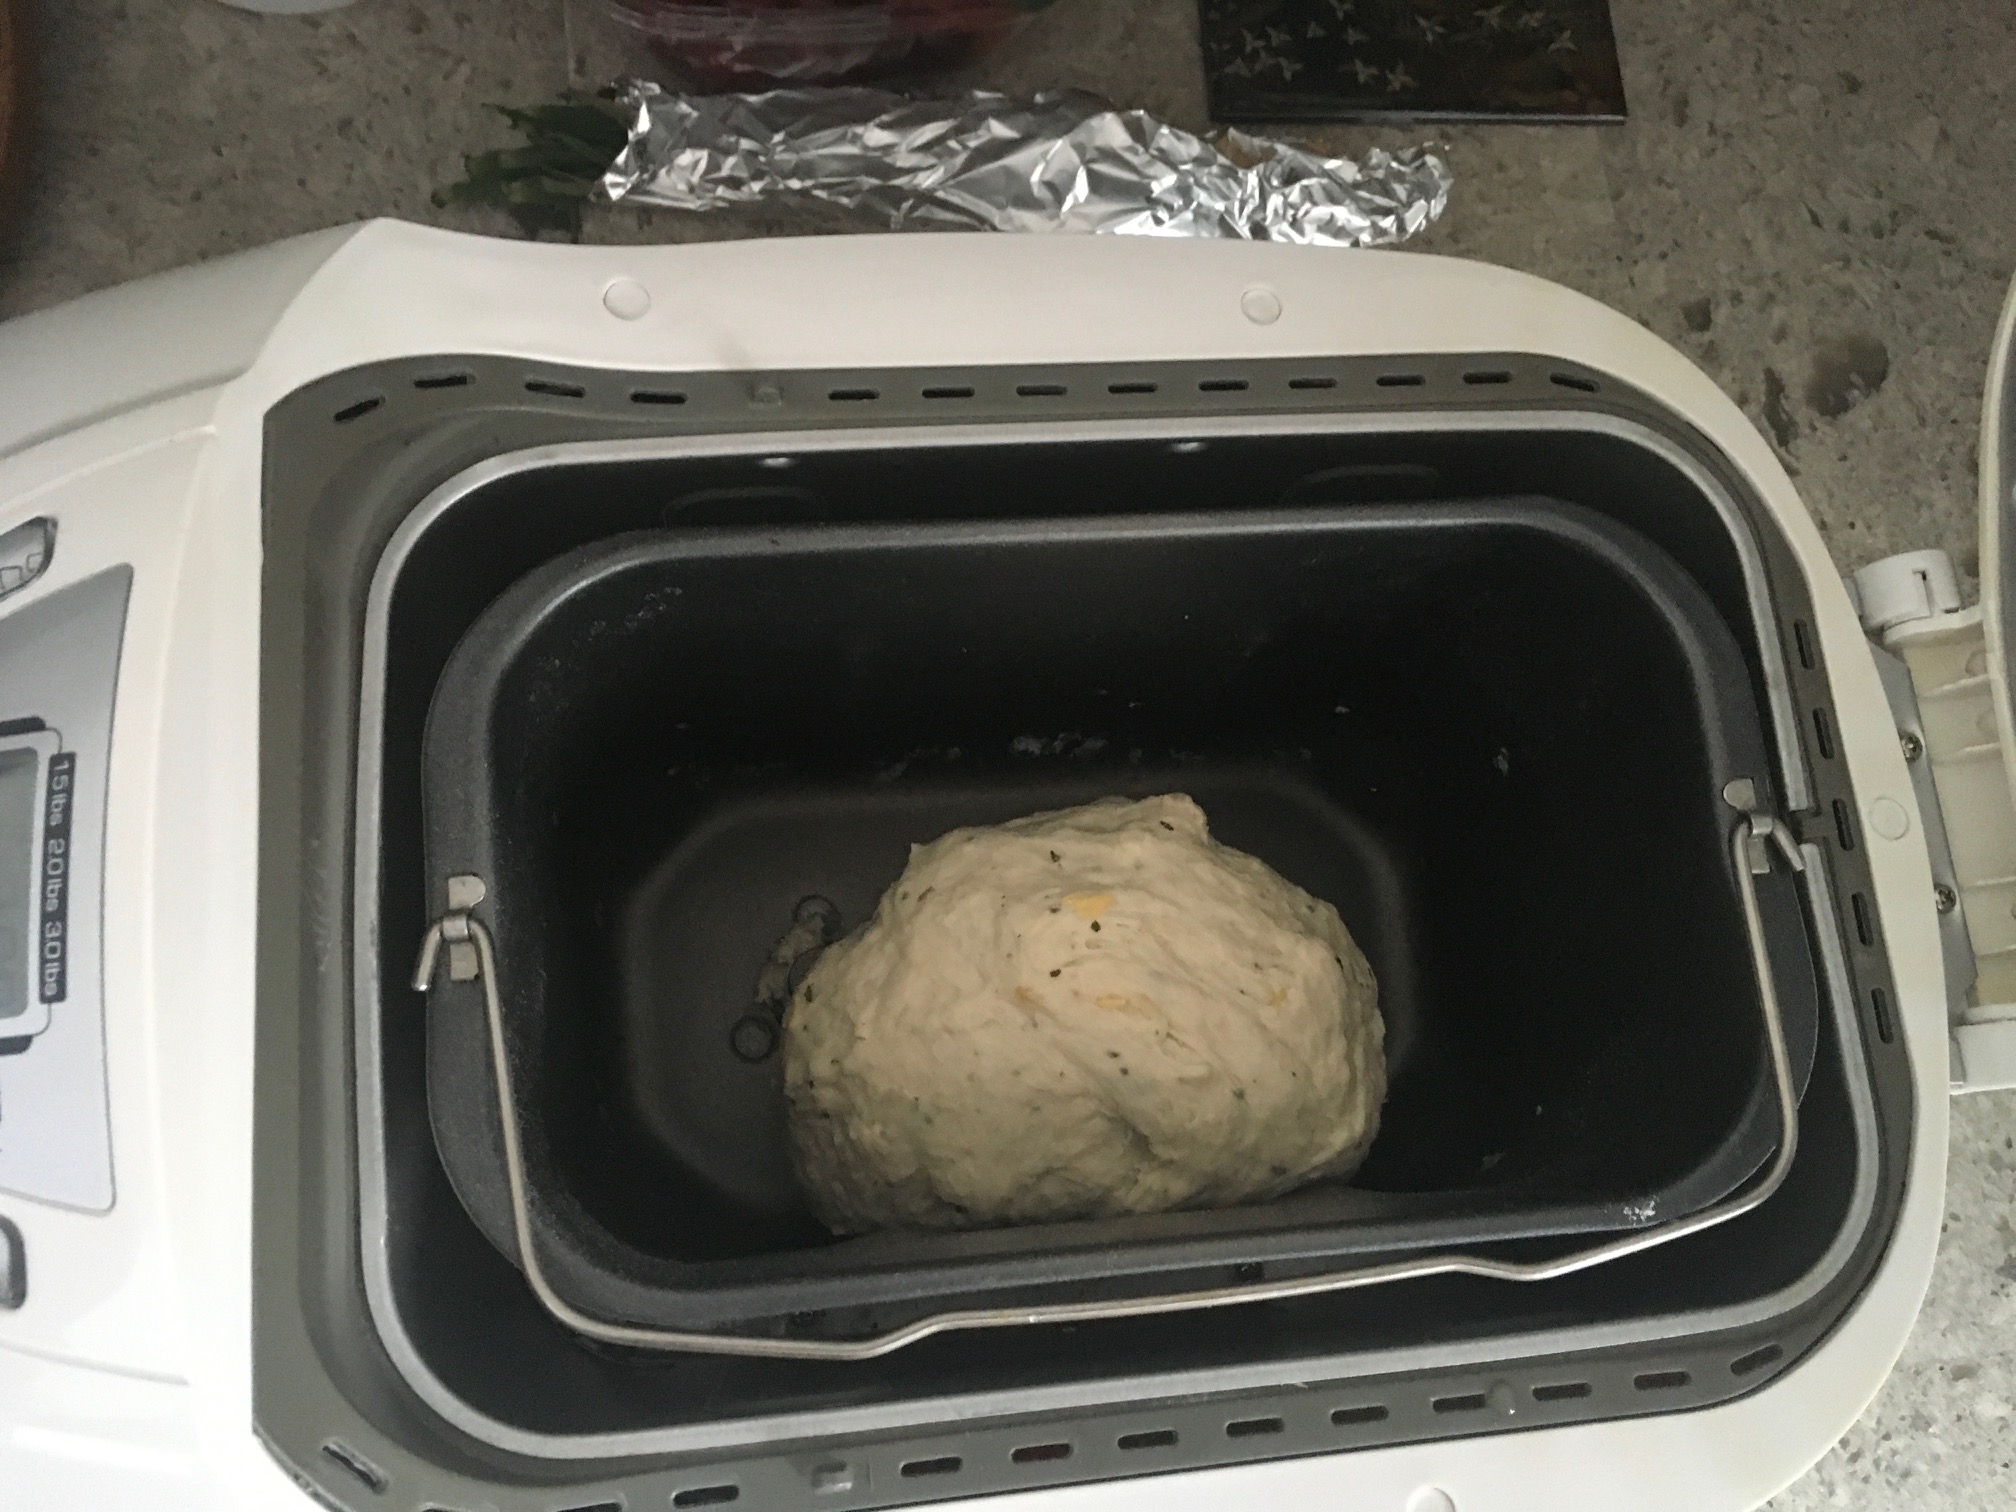 Dough in the bread machine